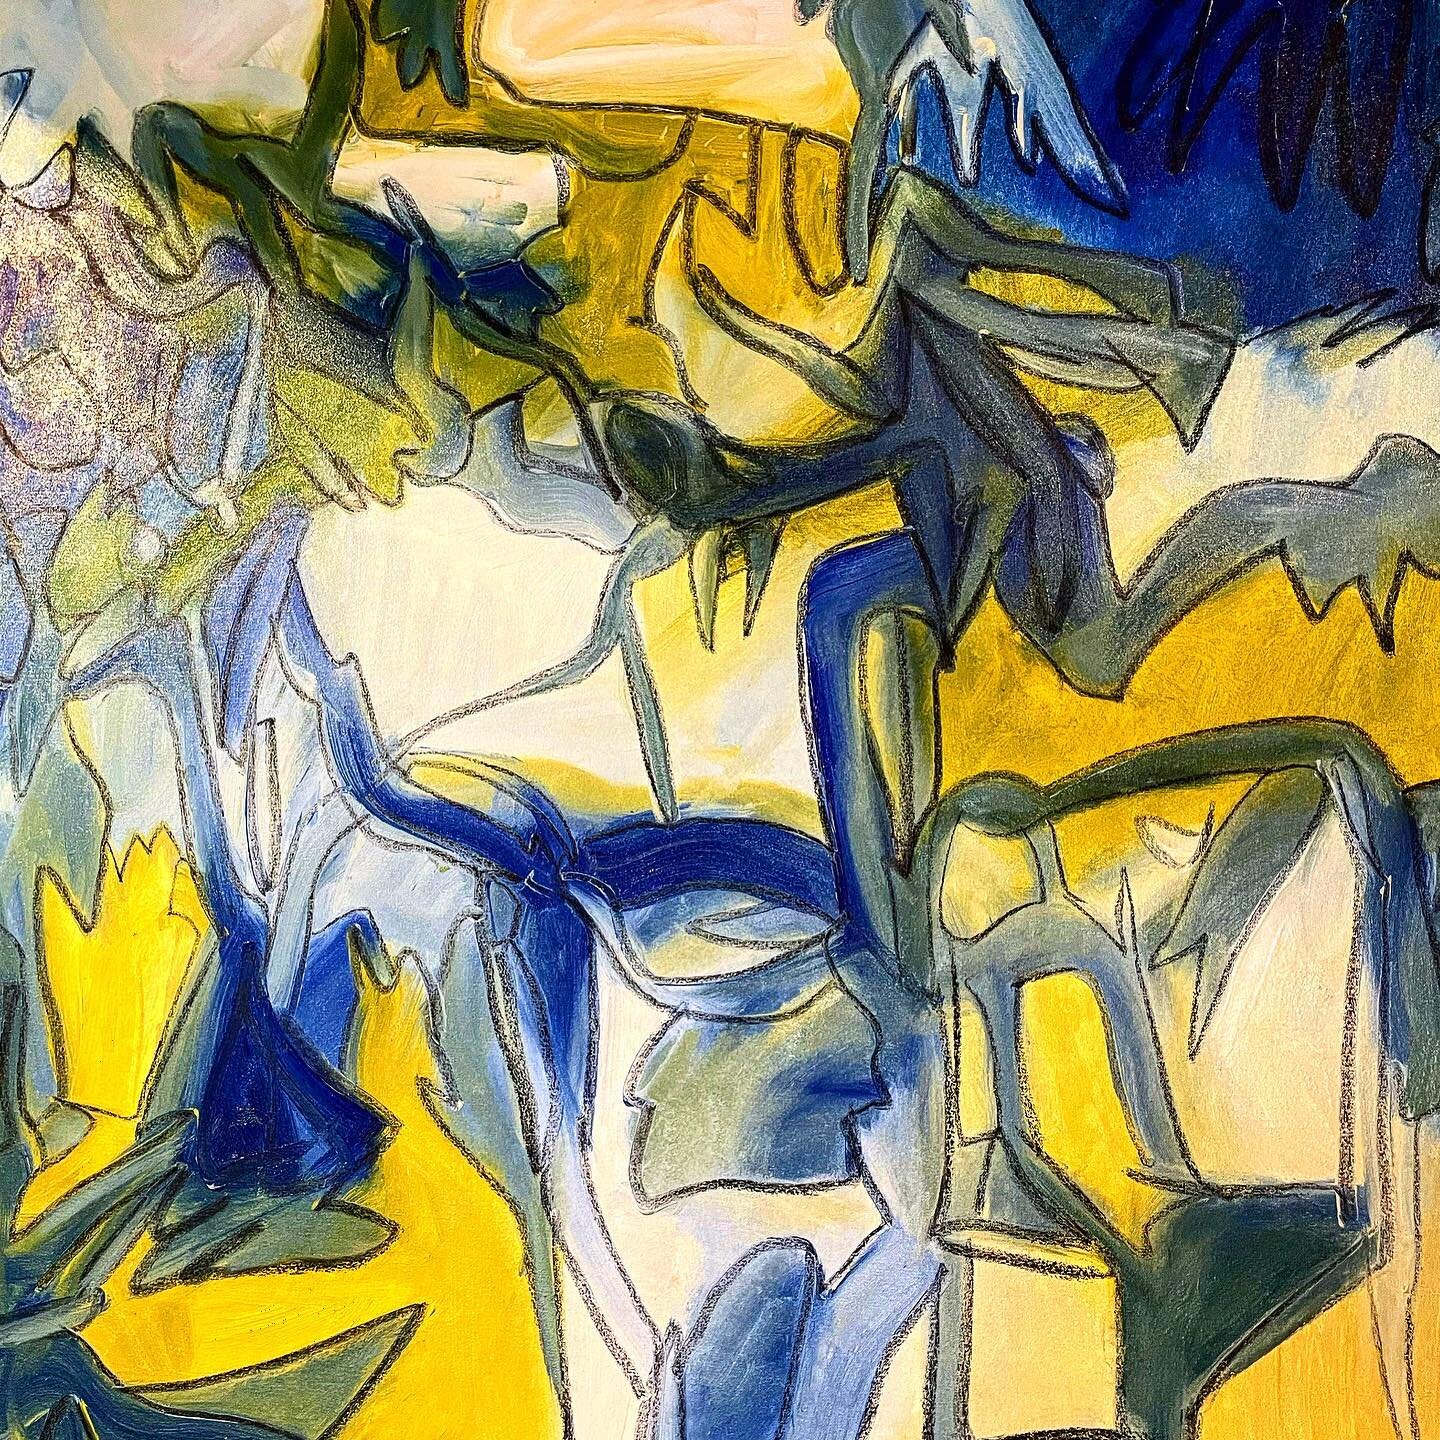 Steven Miller oil on canvas 48x48&rdquo; on exhibit @byrdeandtheb www.byrdeandtheb.com #byrdeandtheb #byrdeman #hair #art #beauty #abstract #contemporaryart #painting #litchfieldcounty #ny #la #miami #london #artcollector #interiordesign #love #color